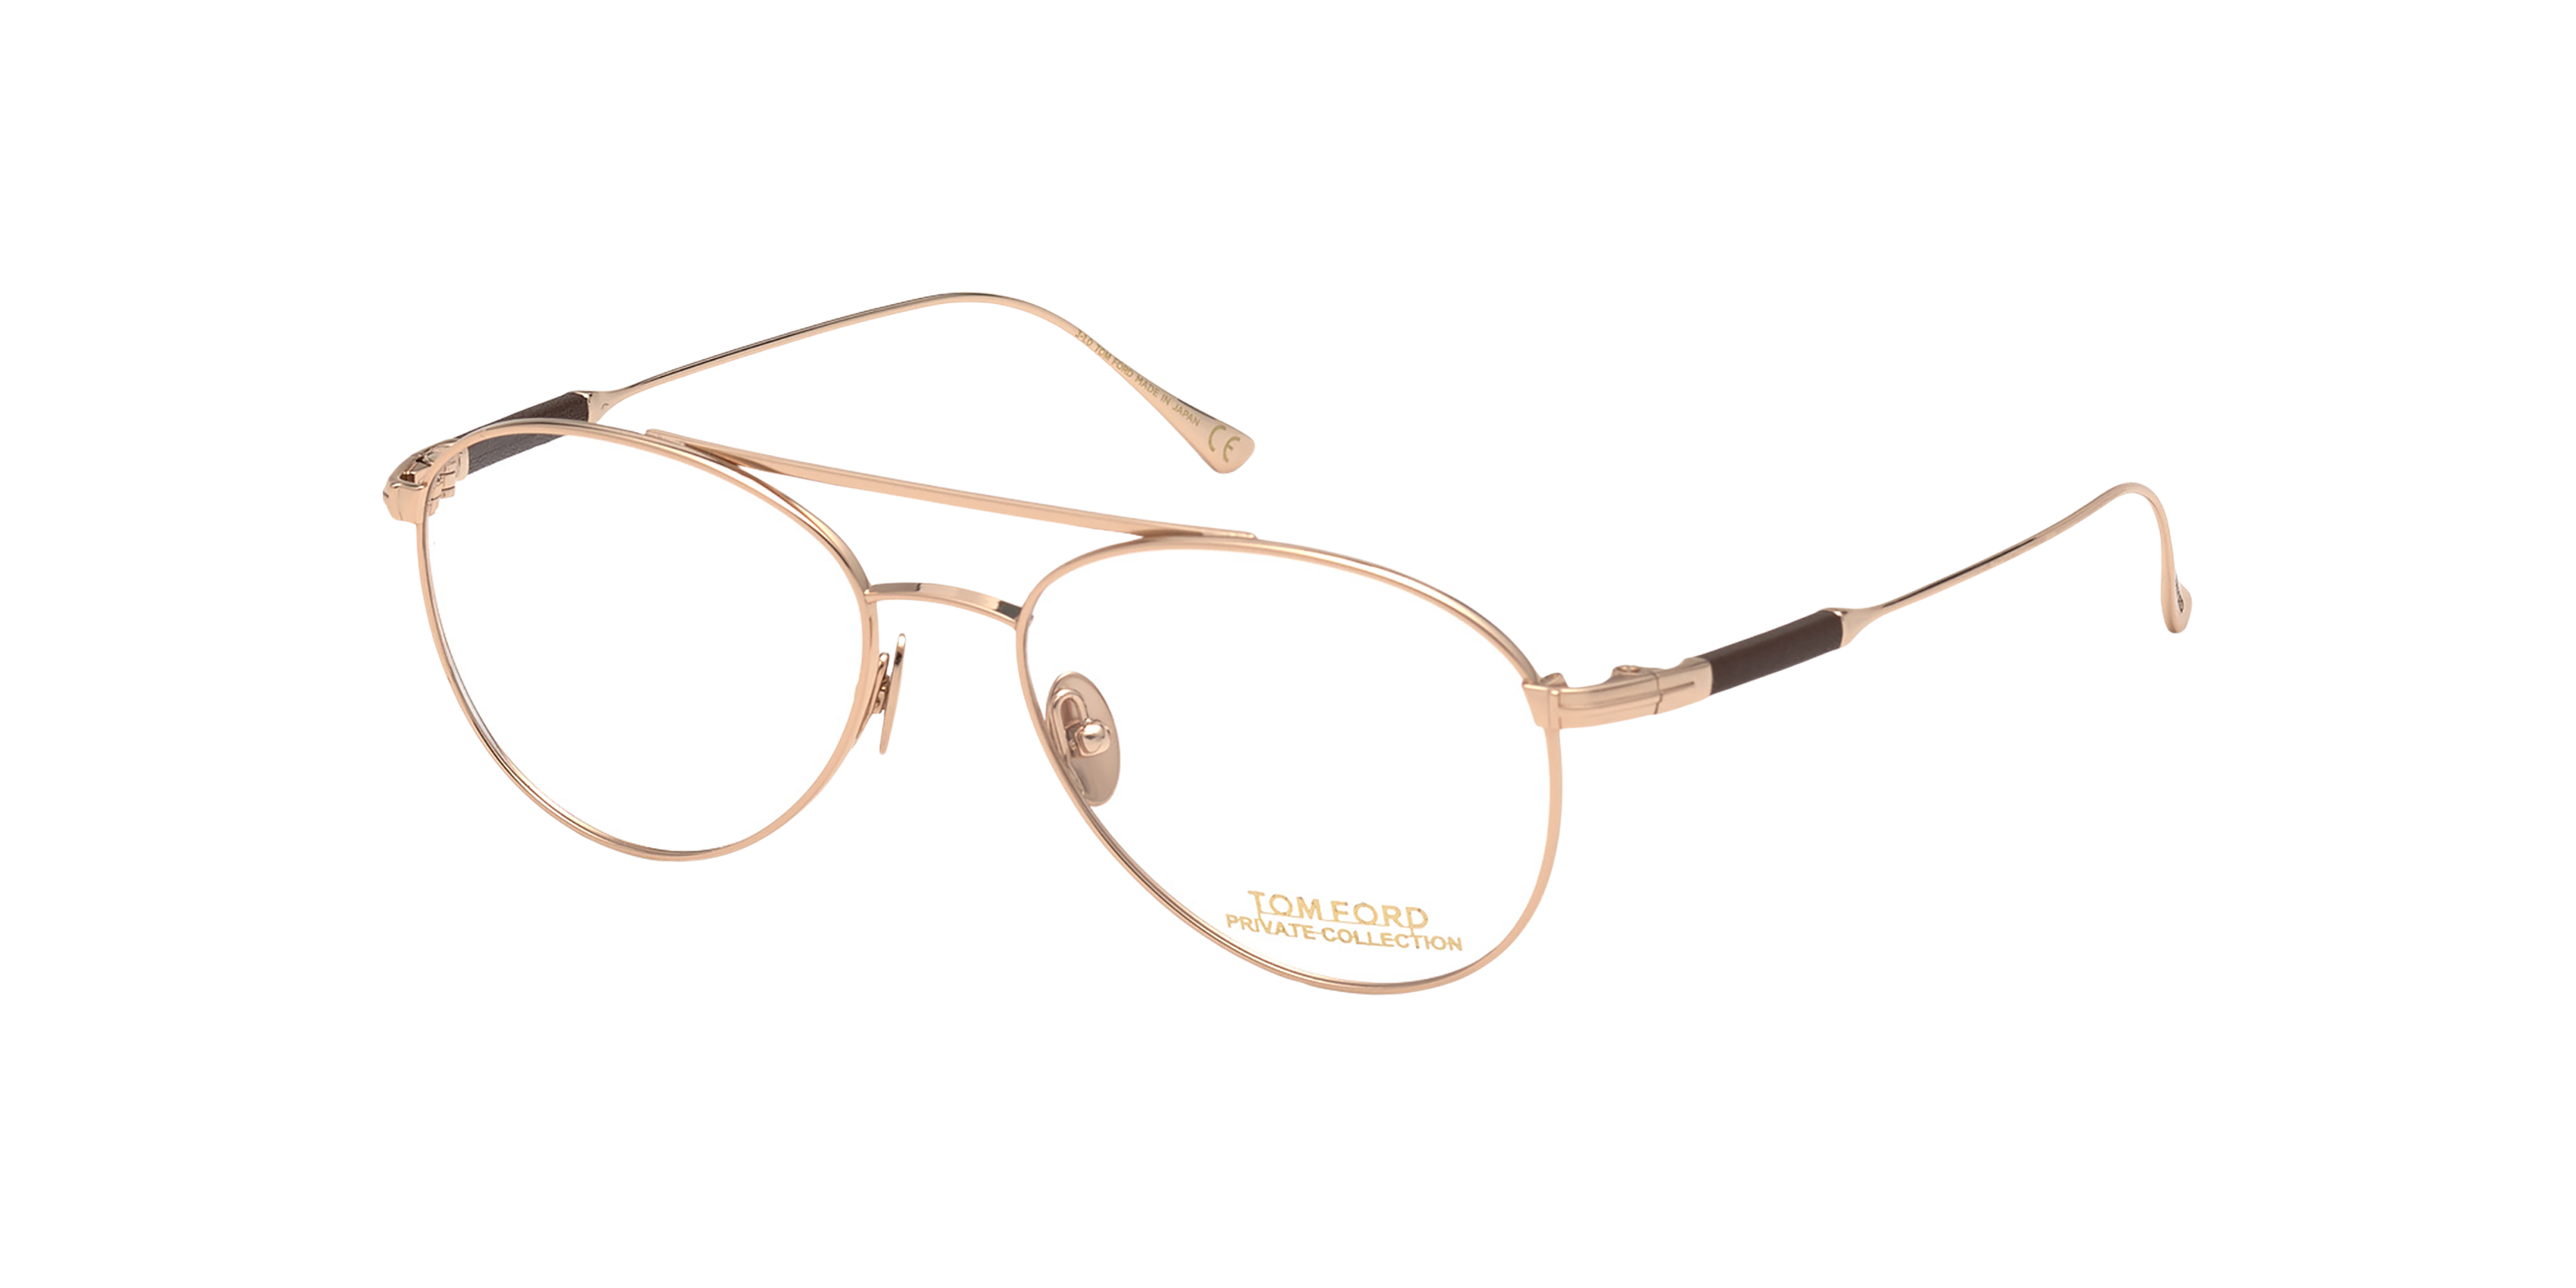 Angle_Left01 Tom Ford FT5716-P Glasses Transparent / Pink, Gold